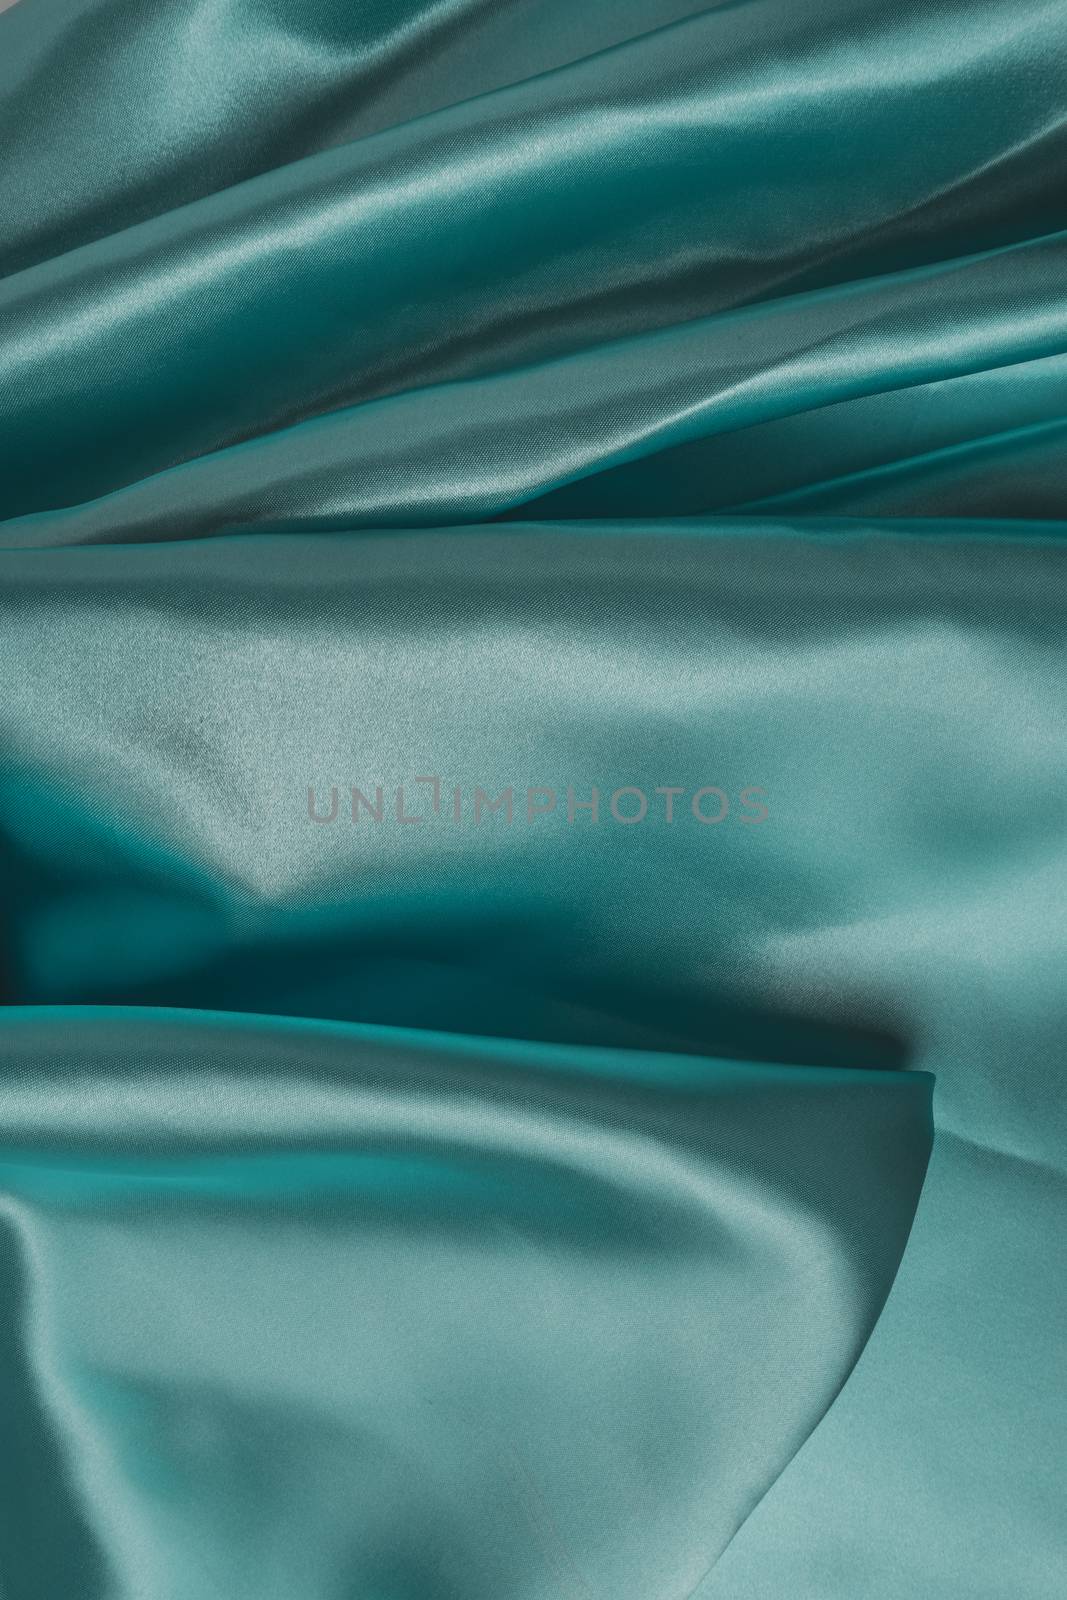 Smooth elegant emerald silk can use as wedding background. Retro style